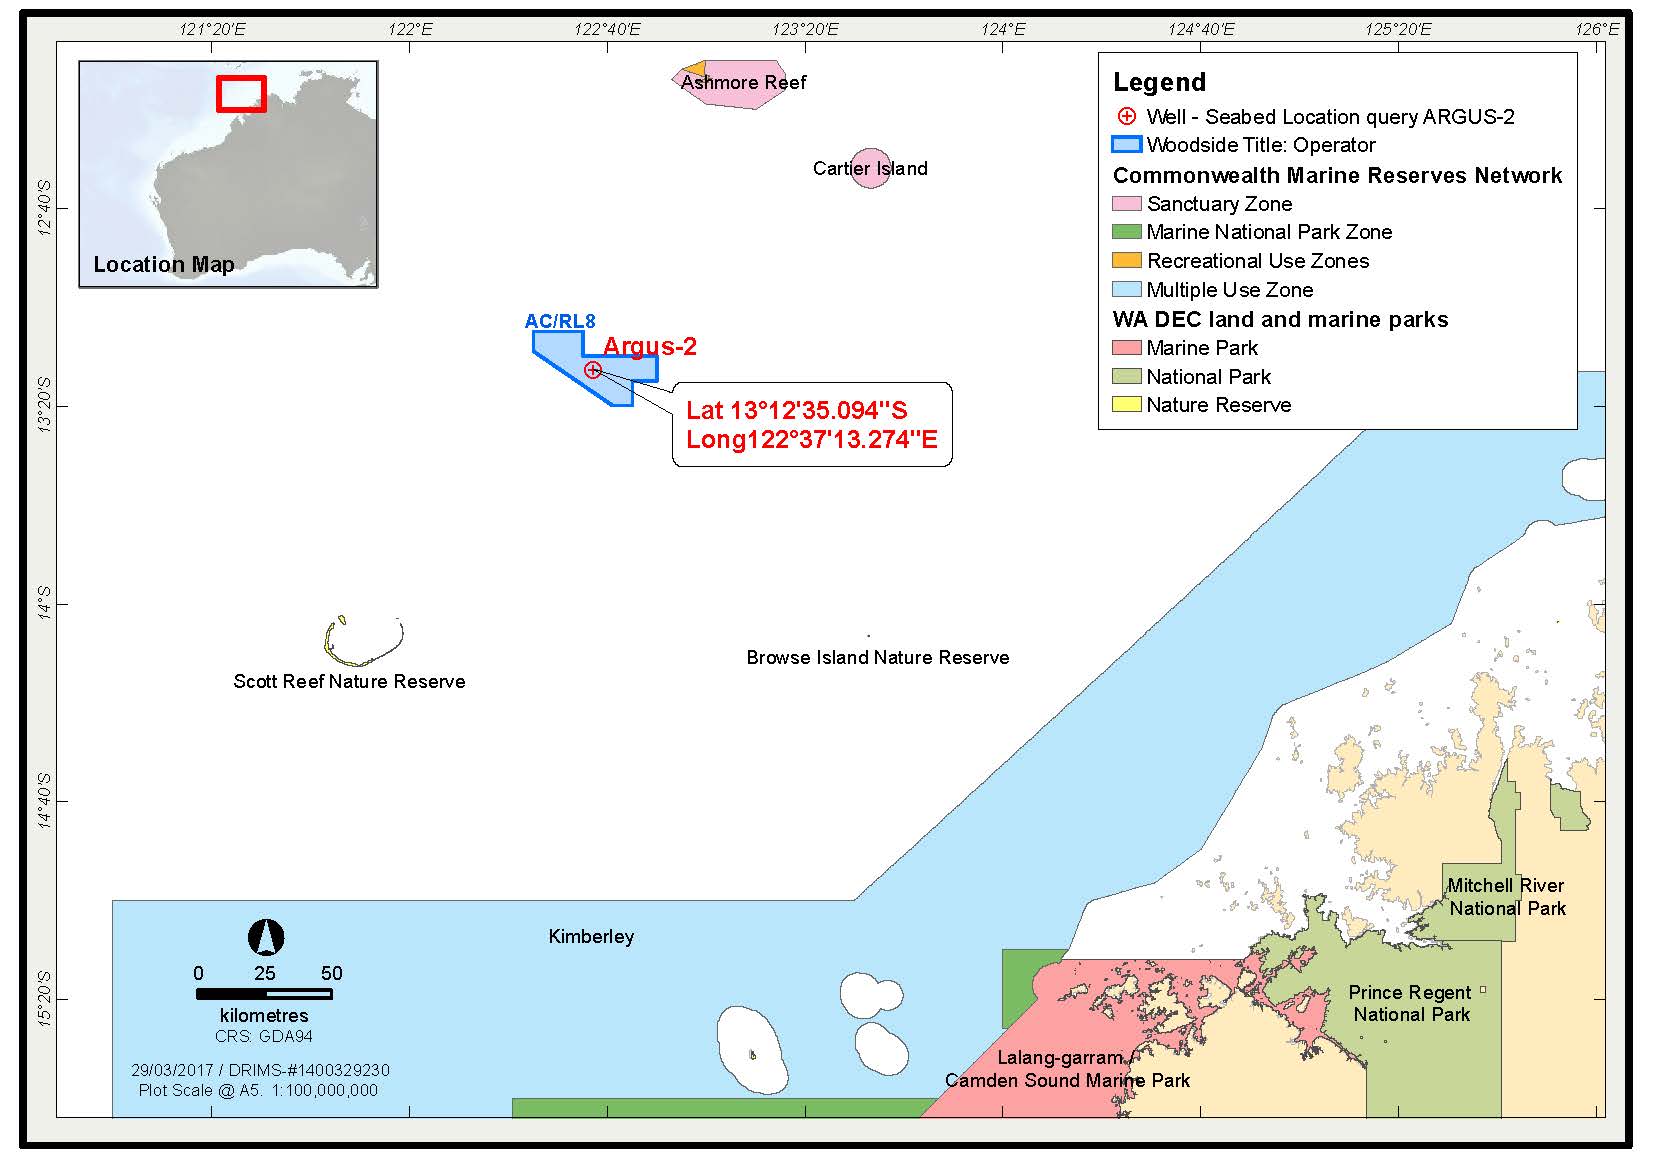 Location map - Activity: Argus-2 Wellhead (refer to description)